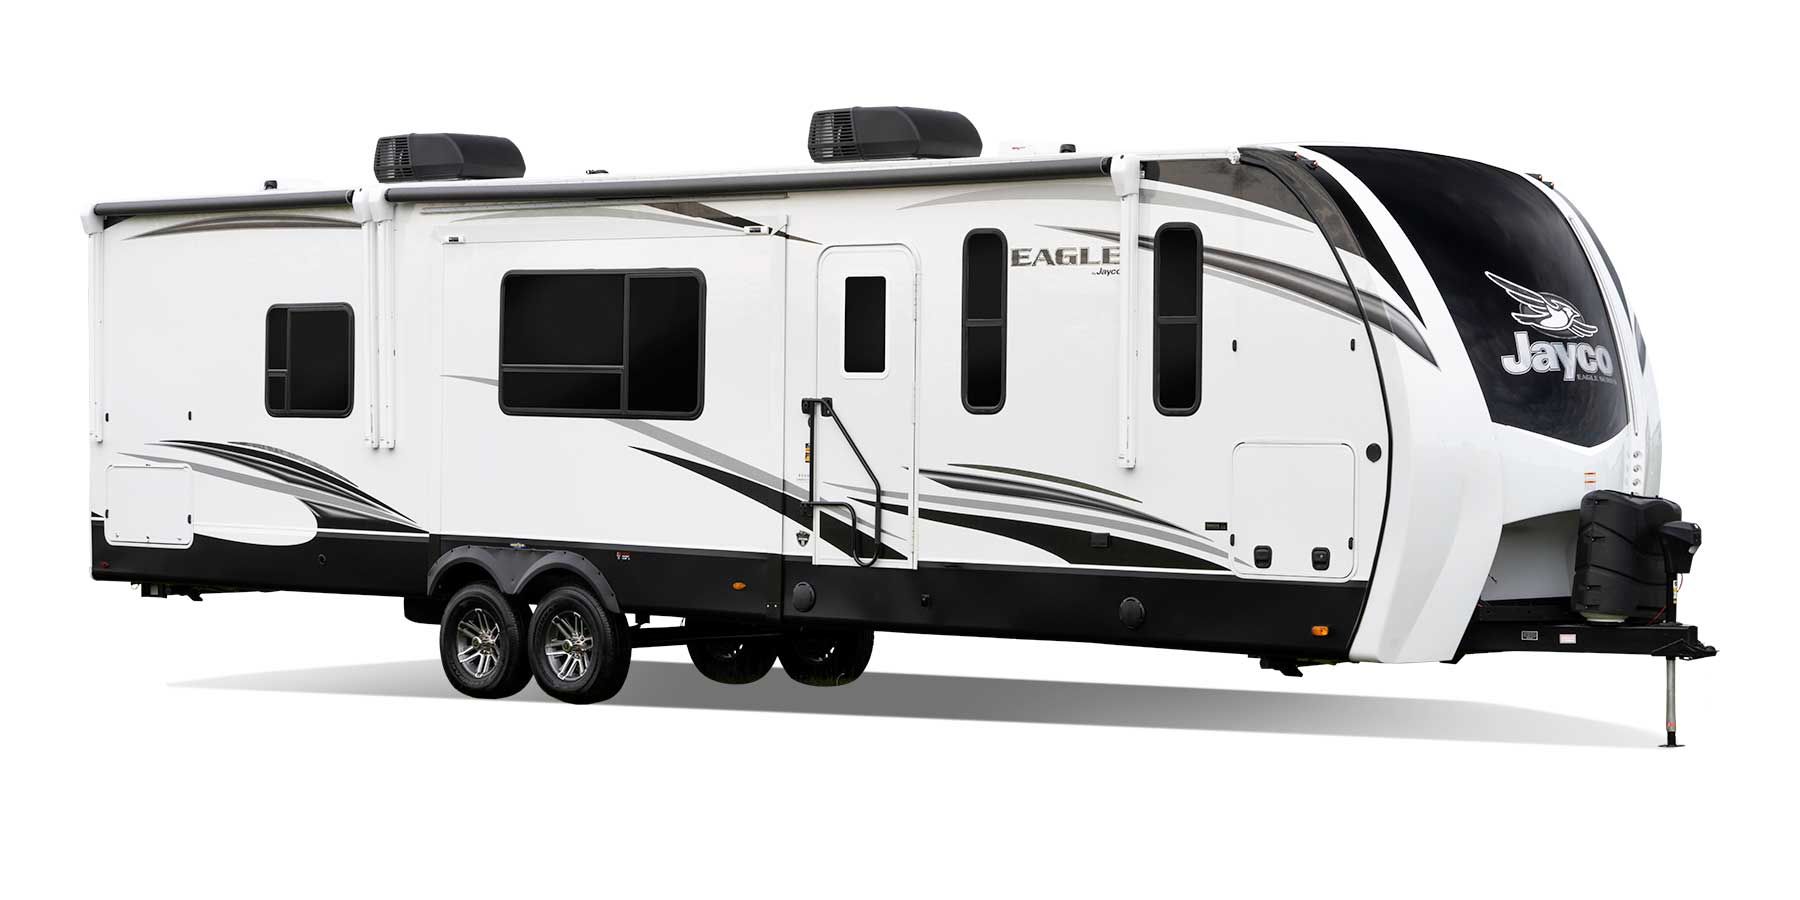 24 foot luxury travel trailer